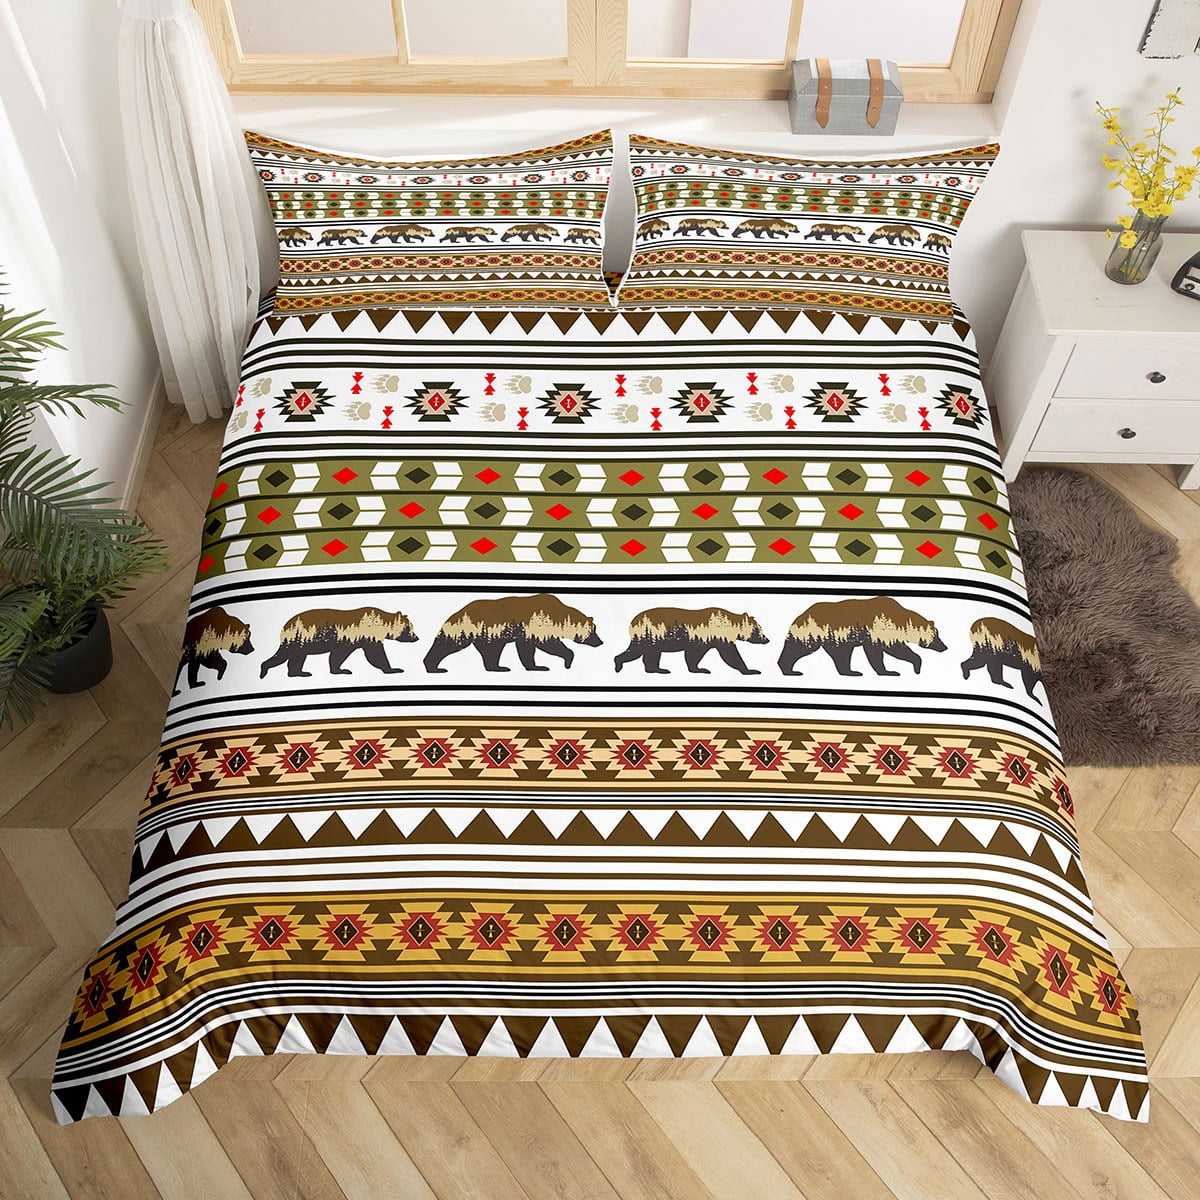 Aztec Bedding Set Western Comforter Cover for Kids Child Boys ...